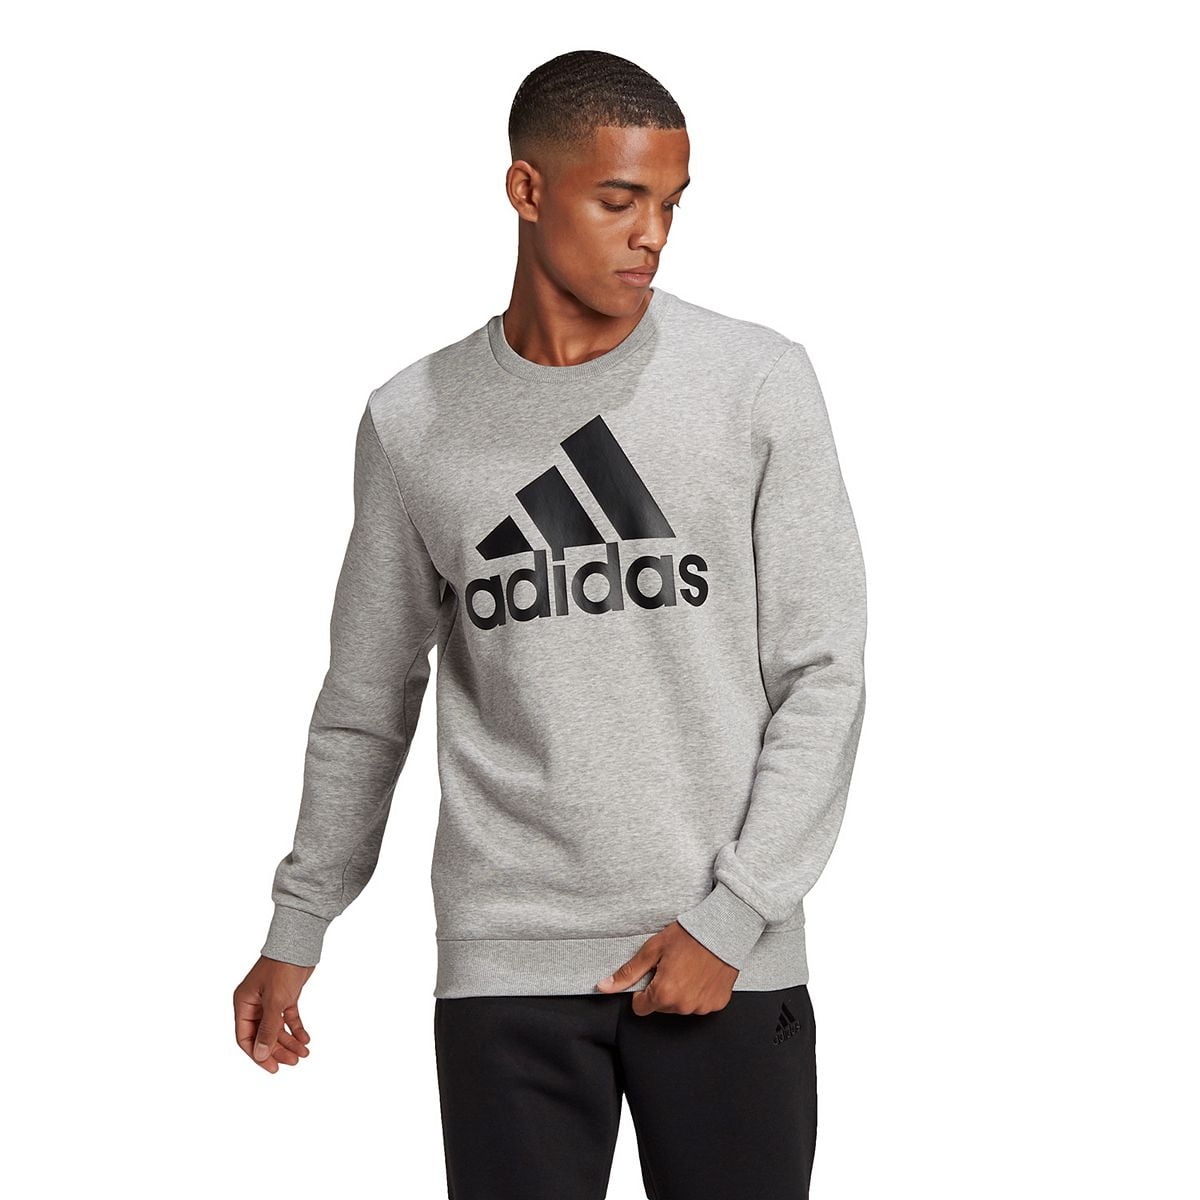 Adidas Men\'s XX-Large Fleece Heather/Black, Sweatshirt, Grey Medium